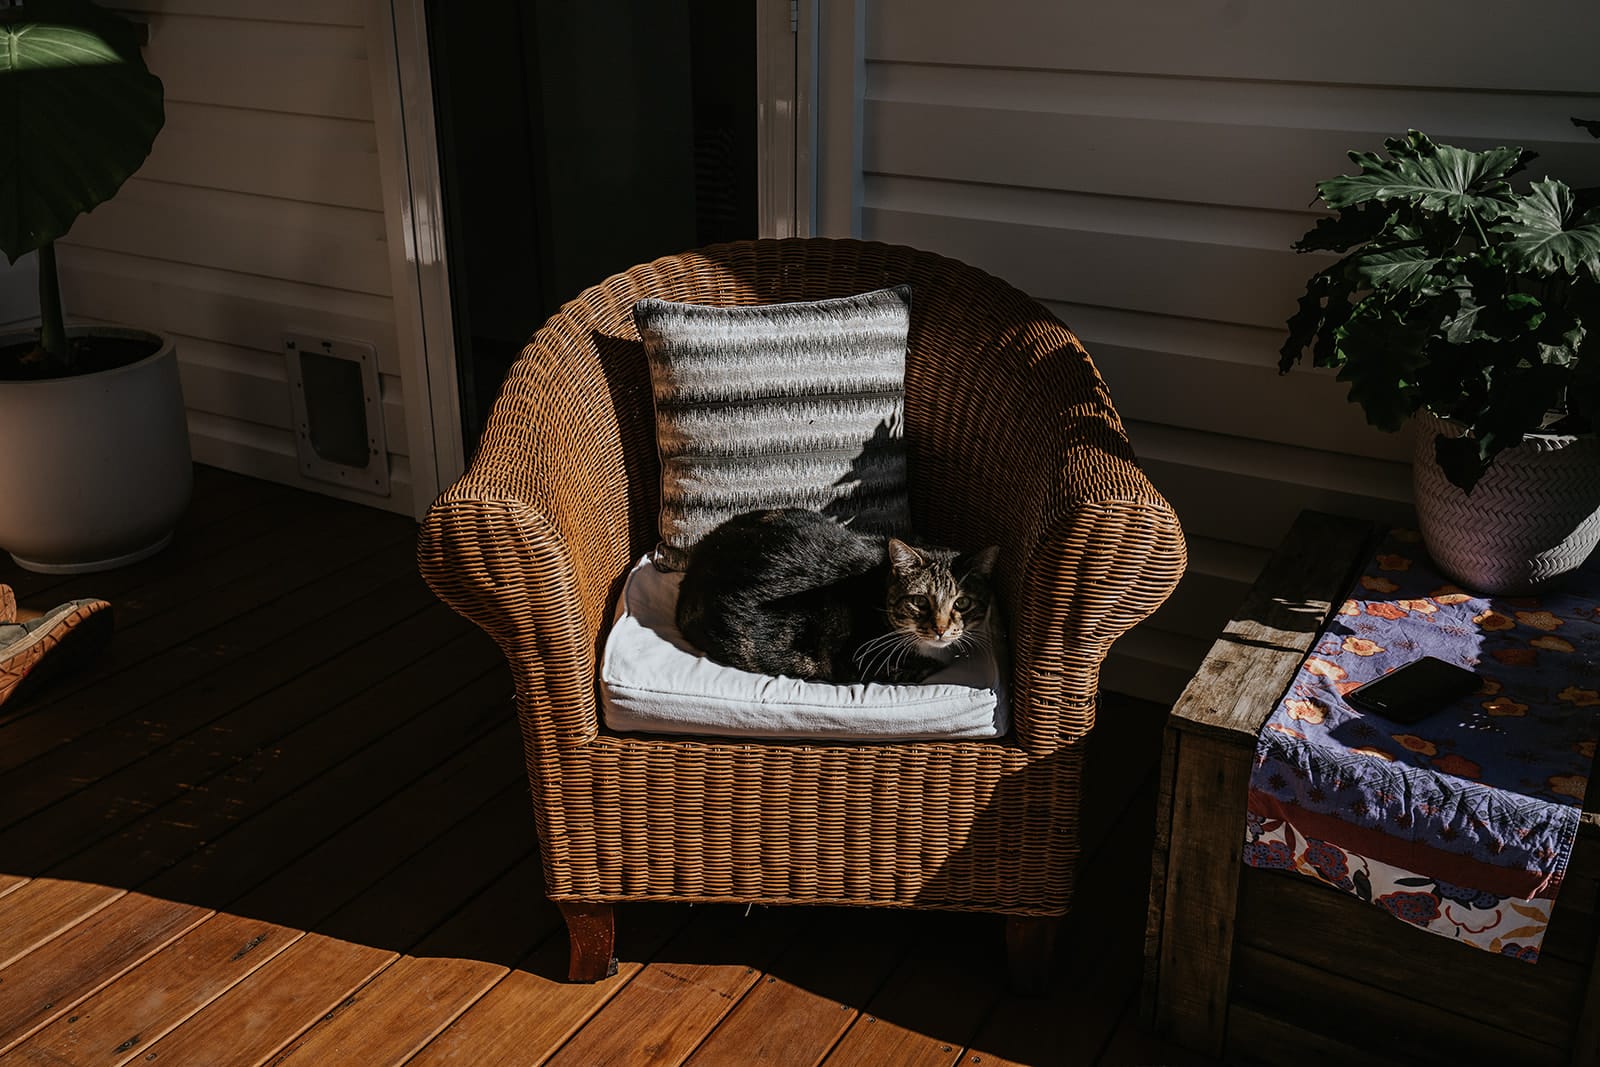 Cat on rattan chair